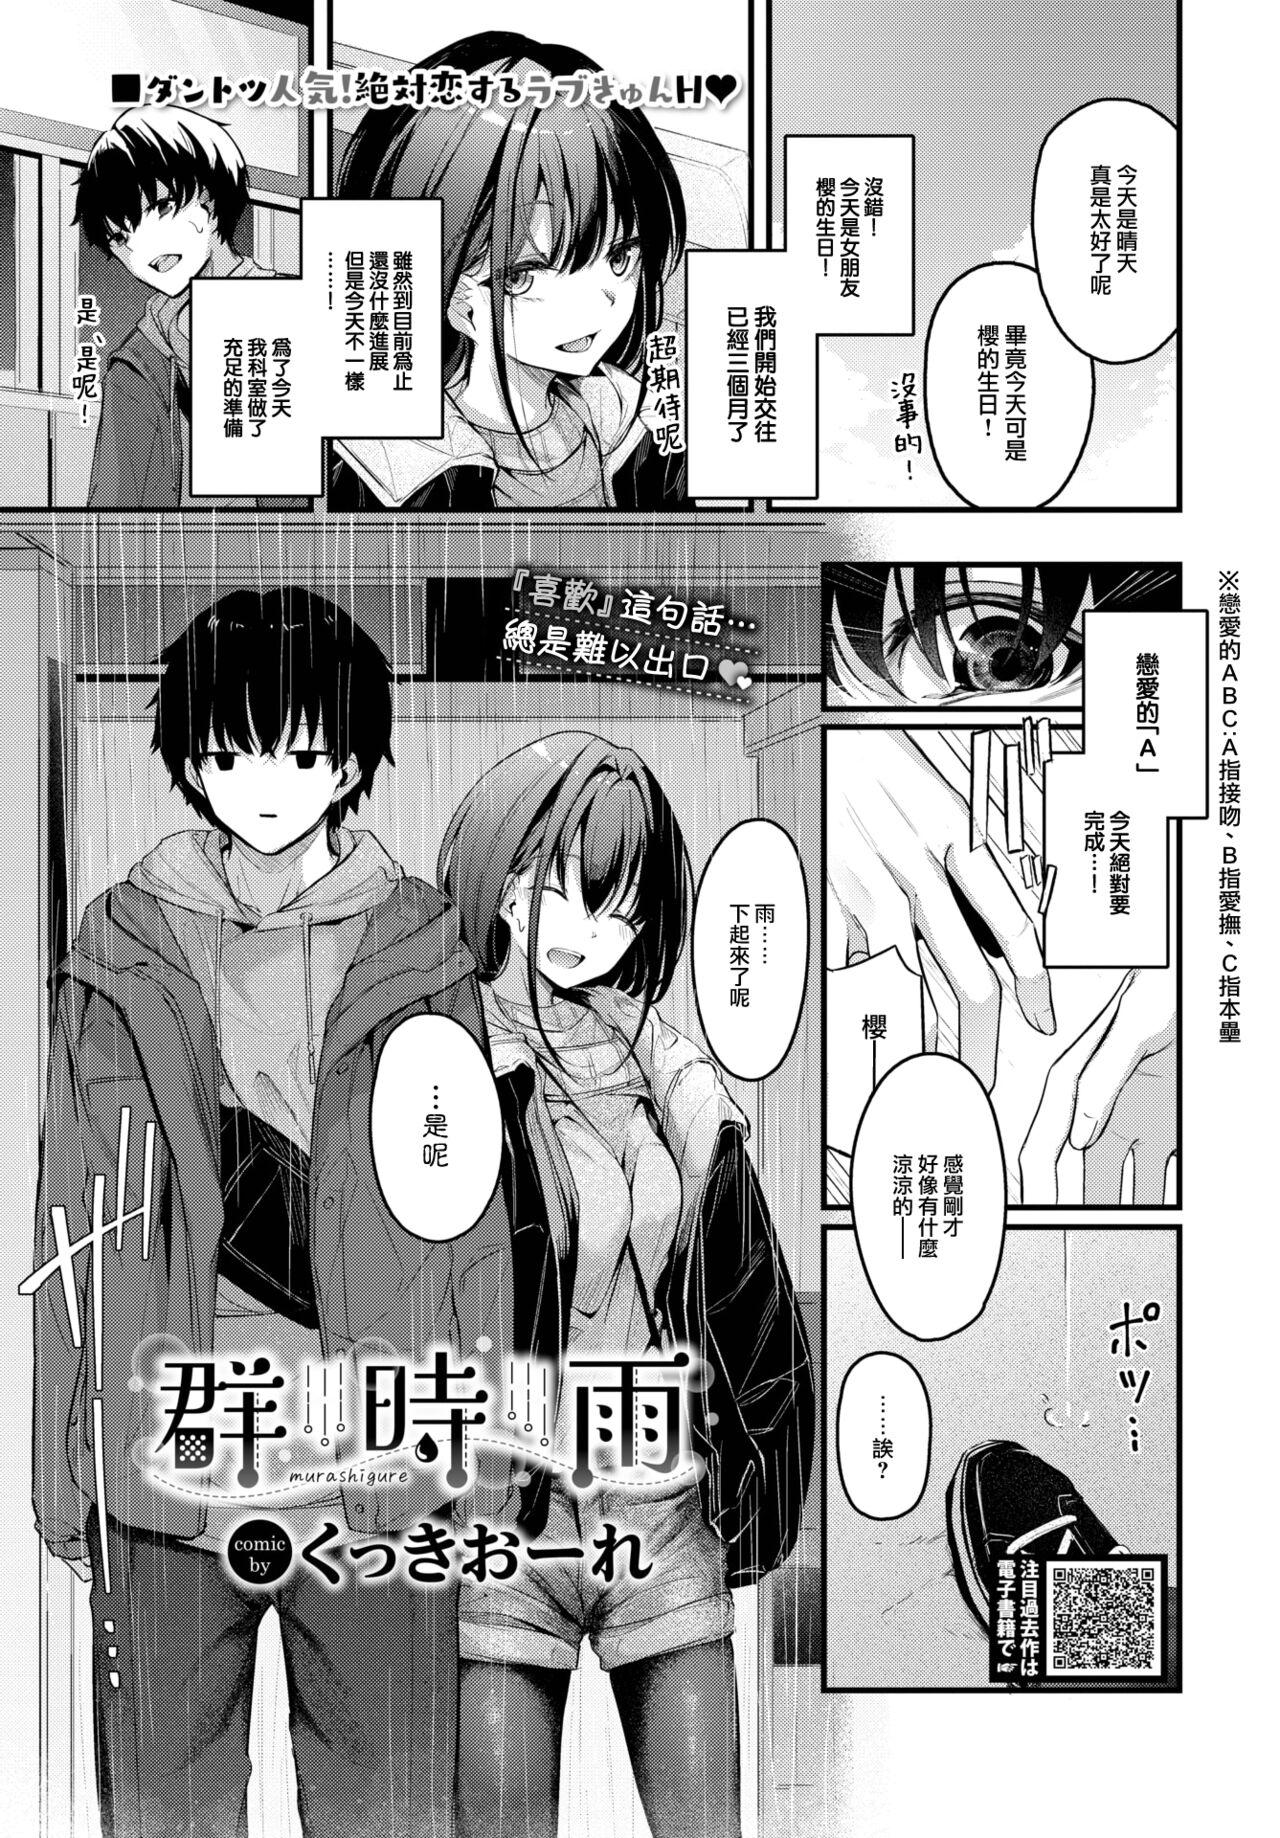 Licking Murashigure Com - Page 2